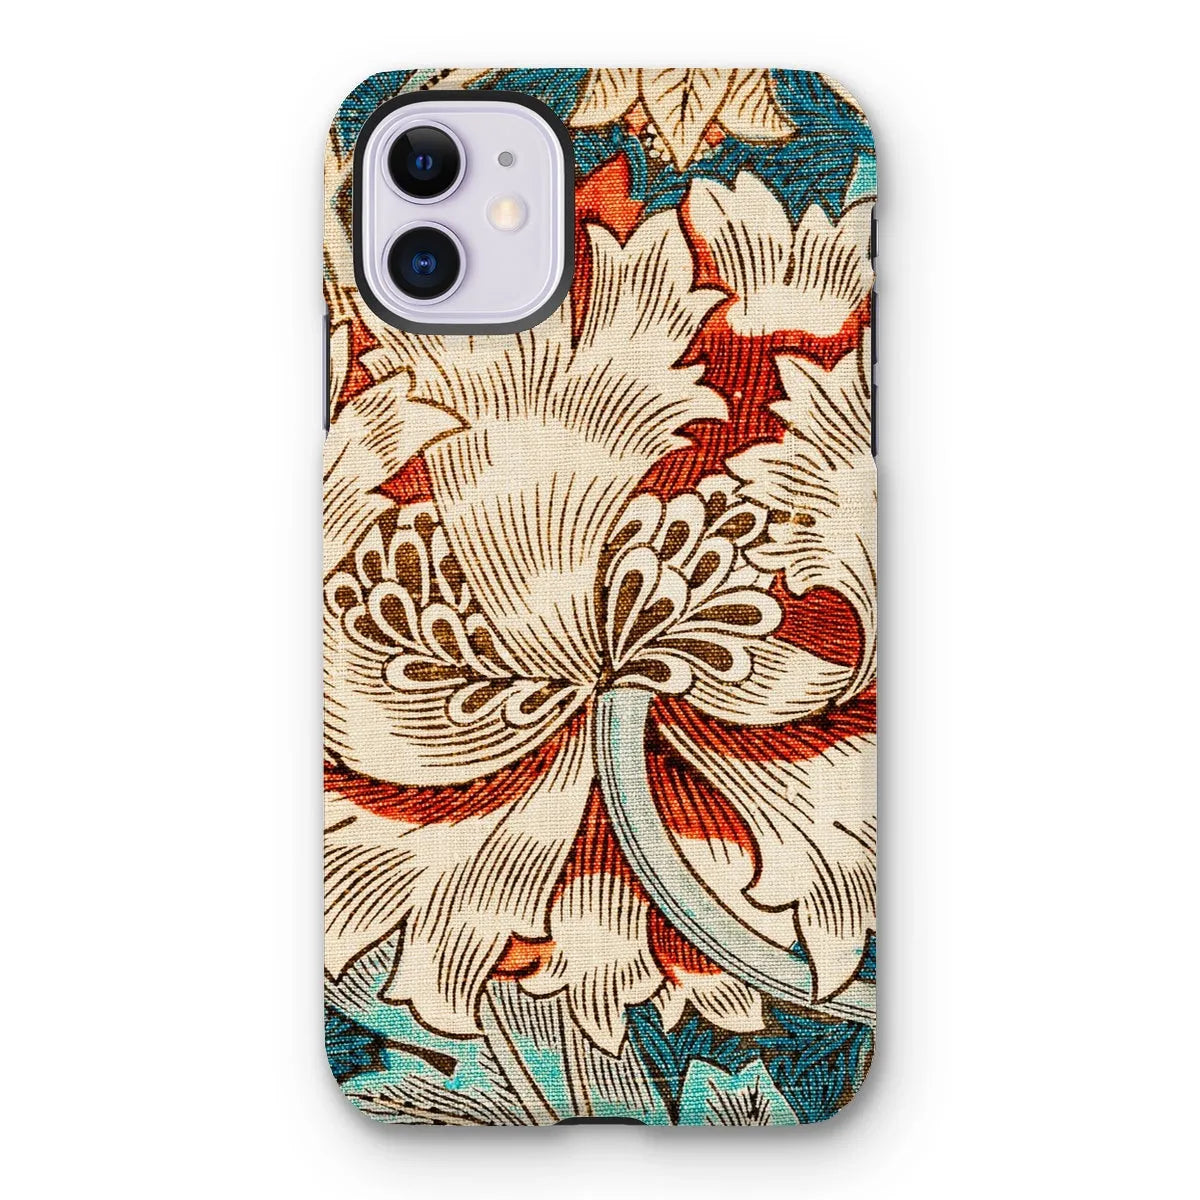 Honeysuckle Too By William Morris Phone Case - Iphone 11 / Matte - Mobile Phone Cases - Aesthetic Art